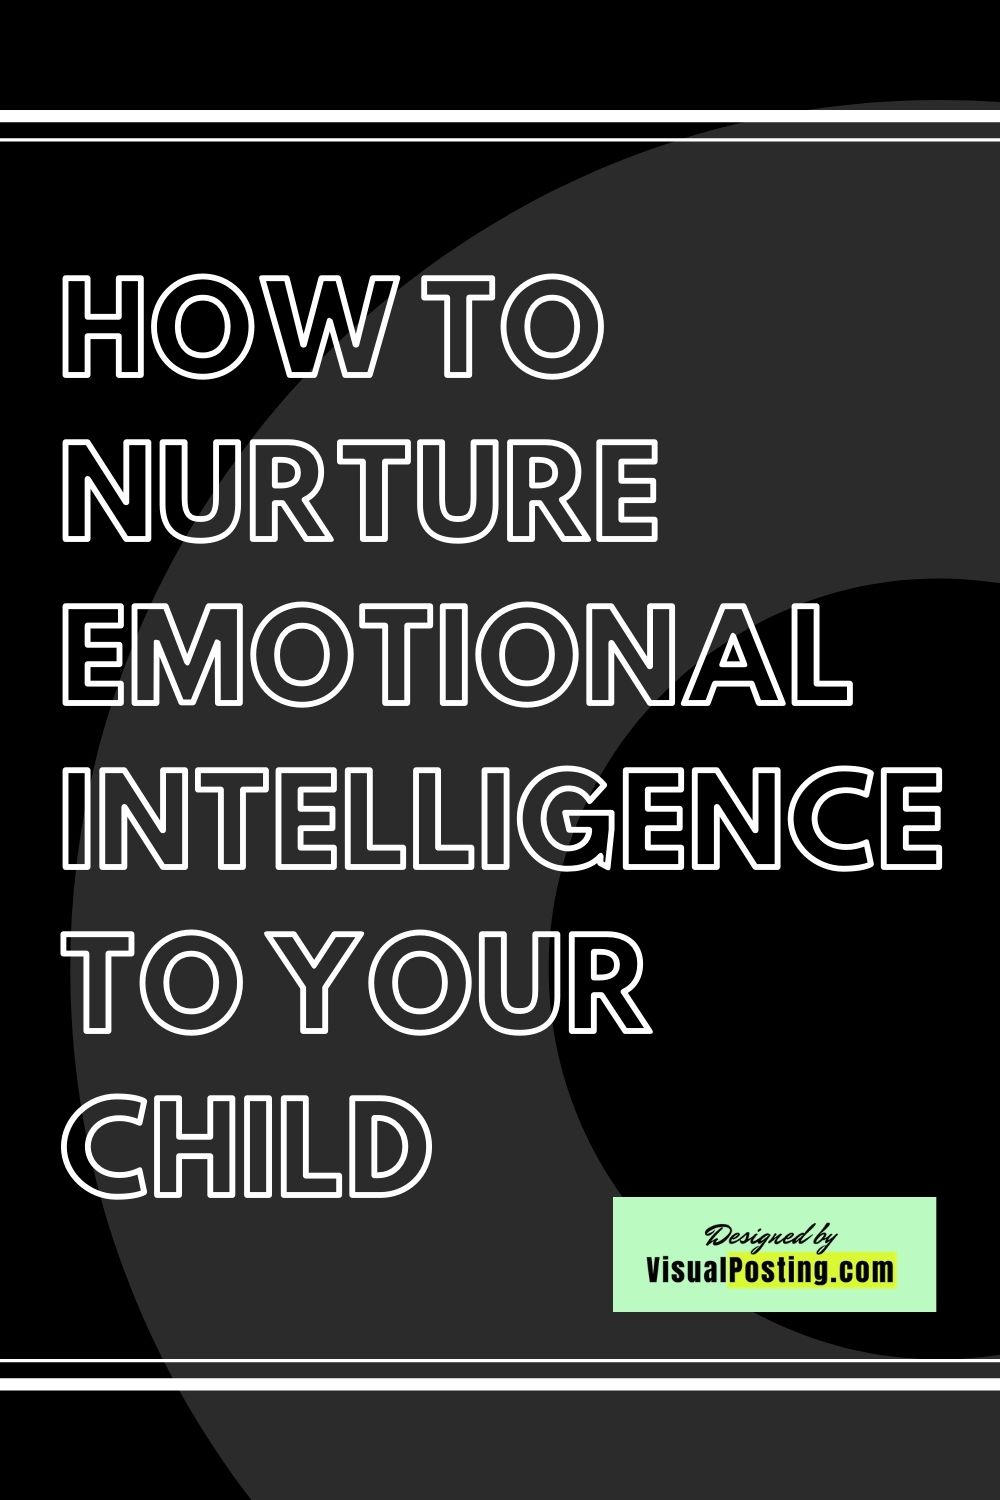 HOW TO NURTURE EMOTIONAL INTELLIGENCE TO YOUR CHILD.jpg